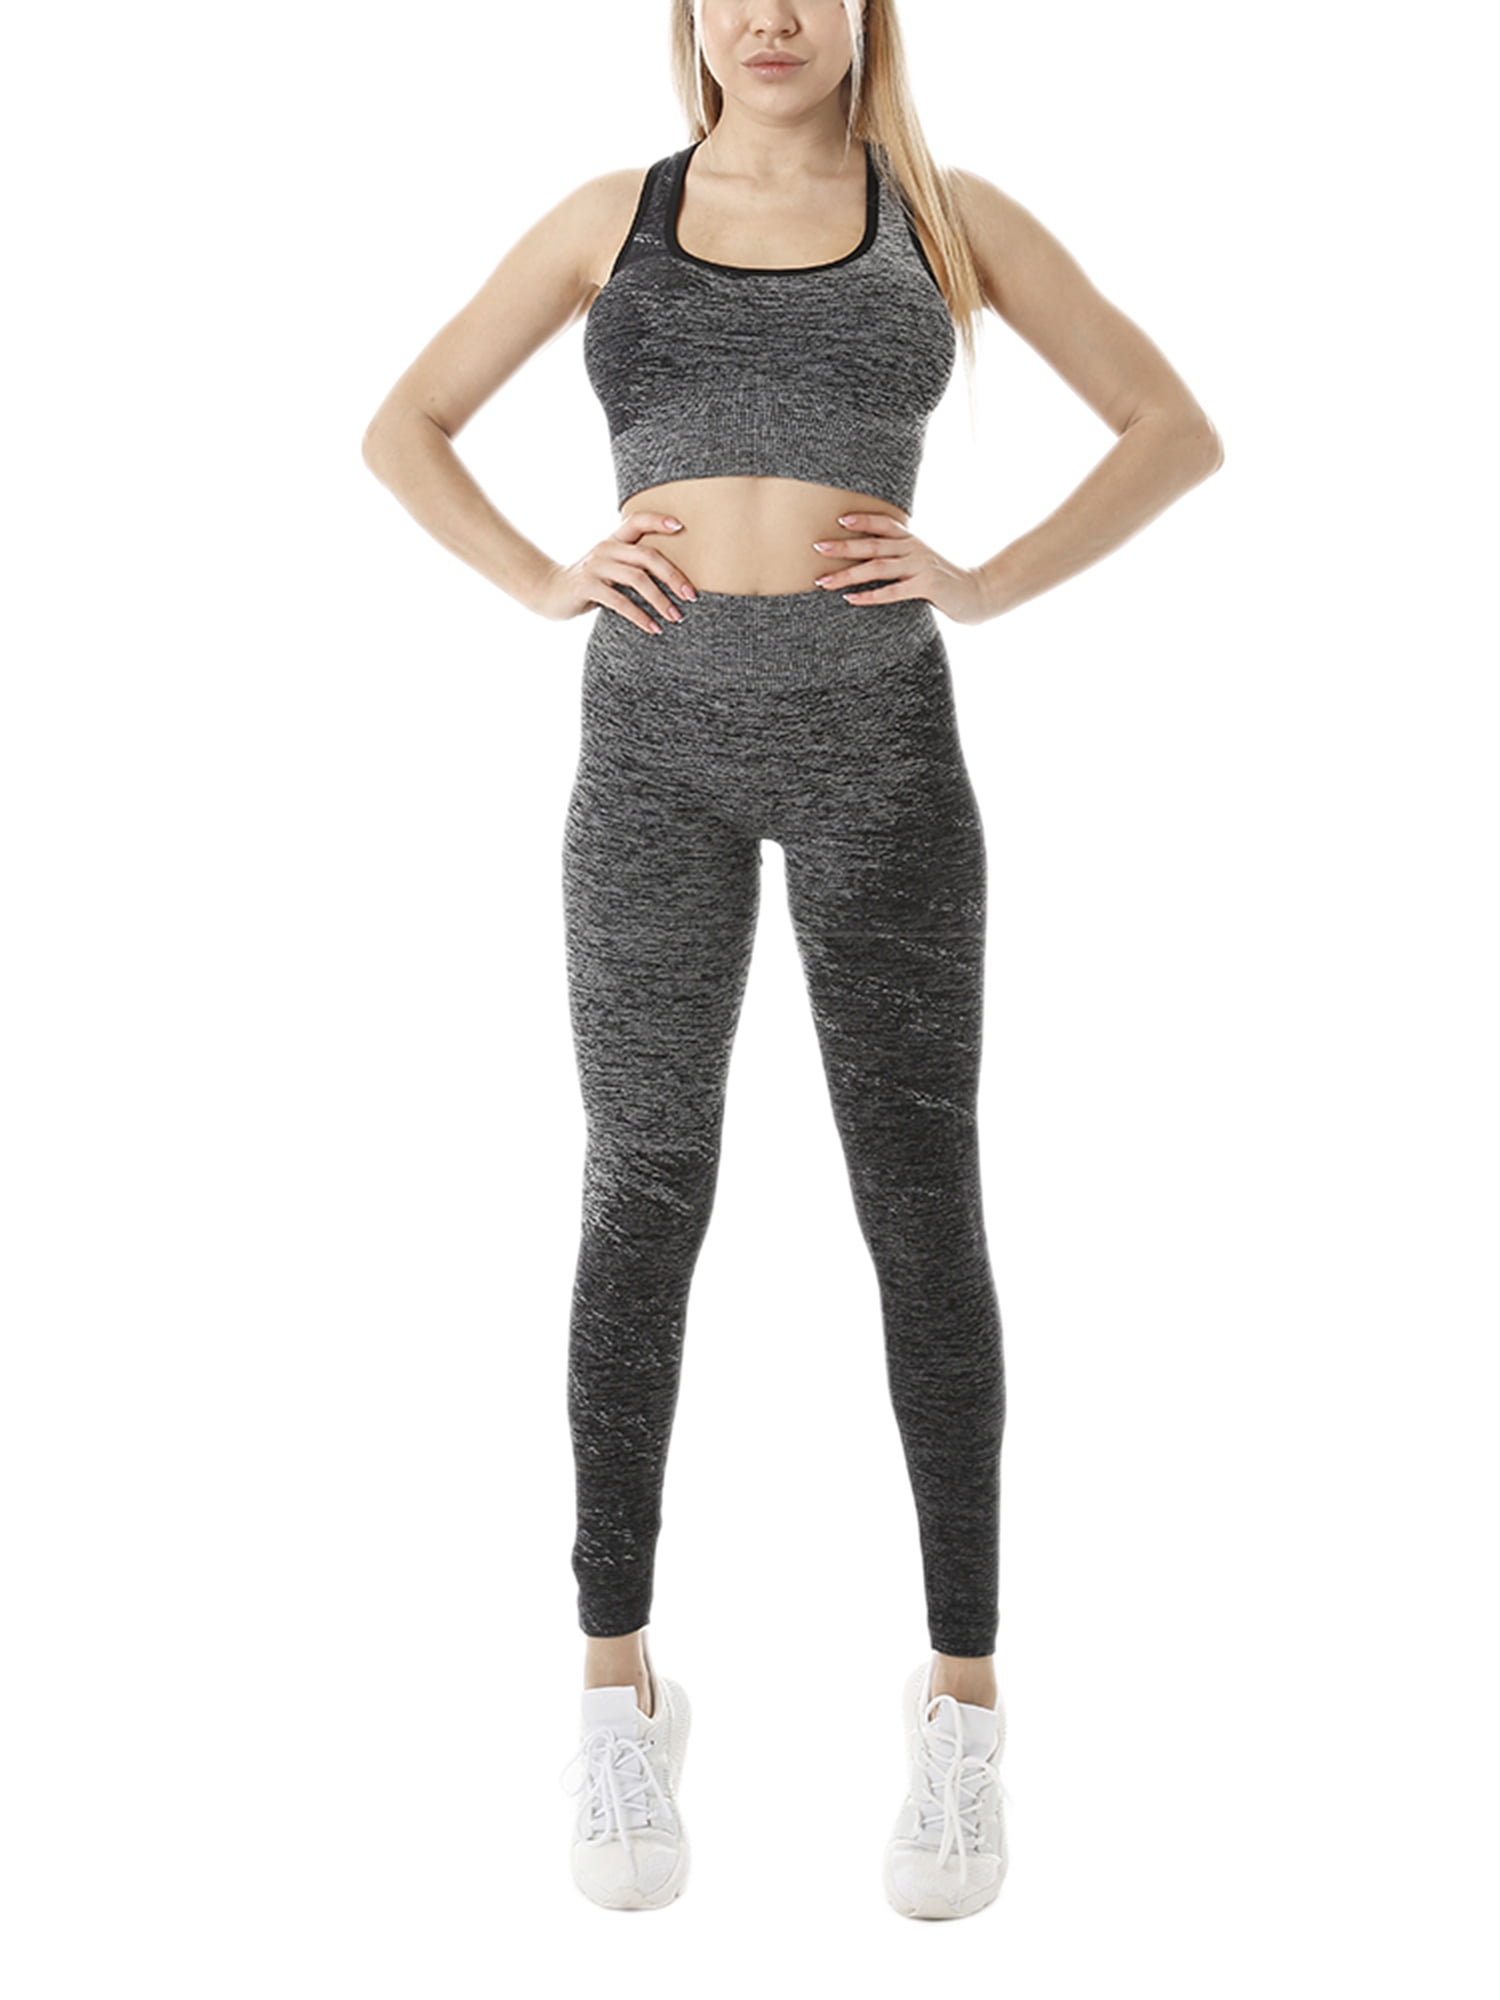 Women Sports Yoga Suit Crop Tops+Leggings Textured Pants Fitness Workout Gym